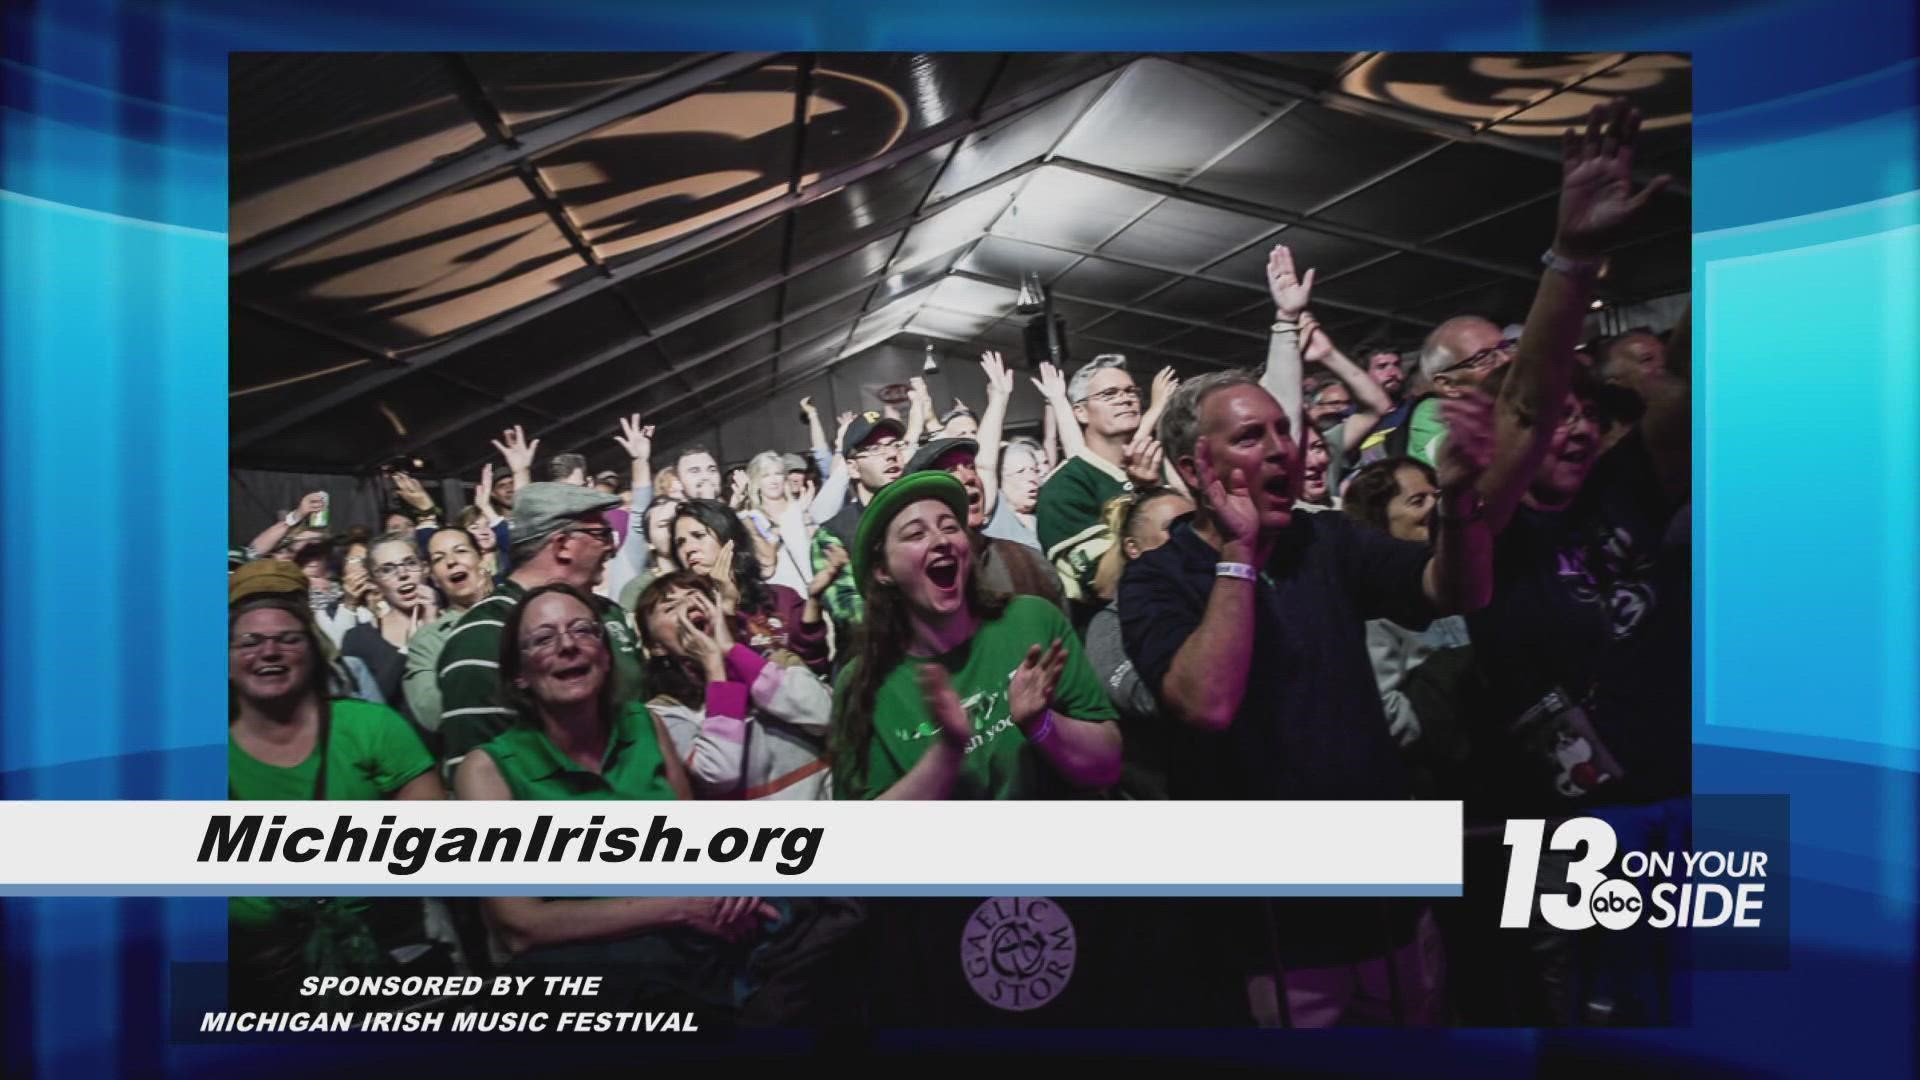 The Michigan Irish Music festival is a celebration of Irish music, culture, dance, and more.